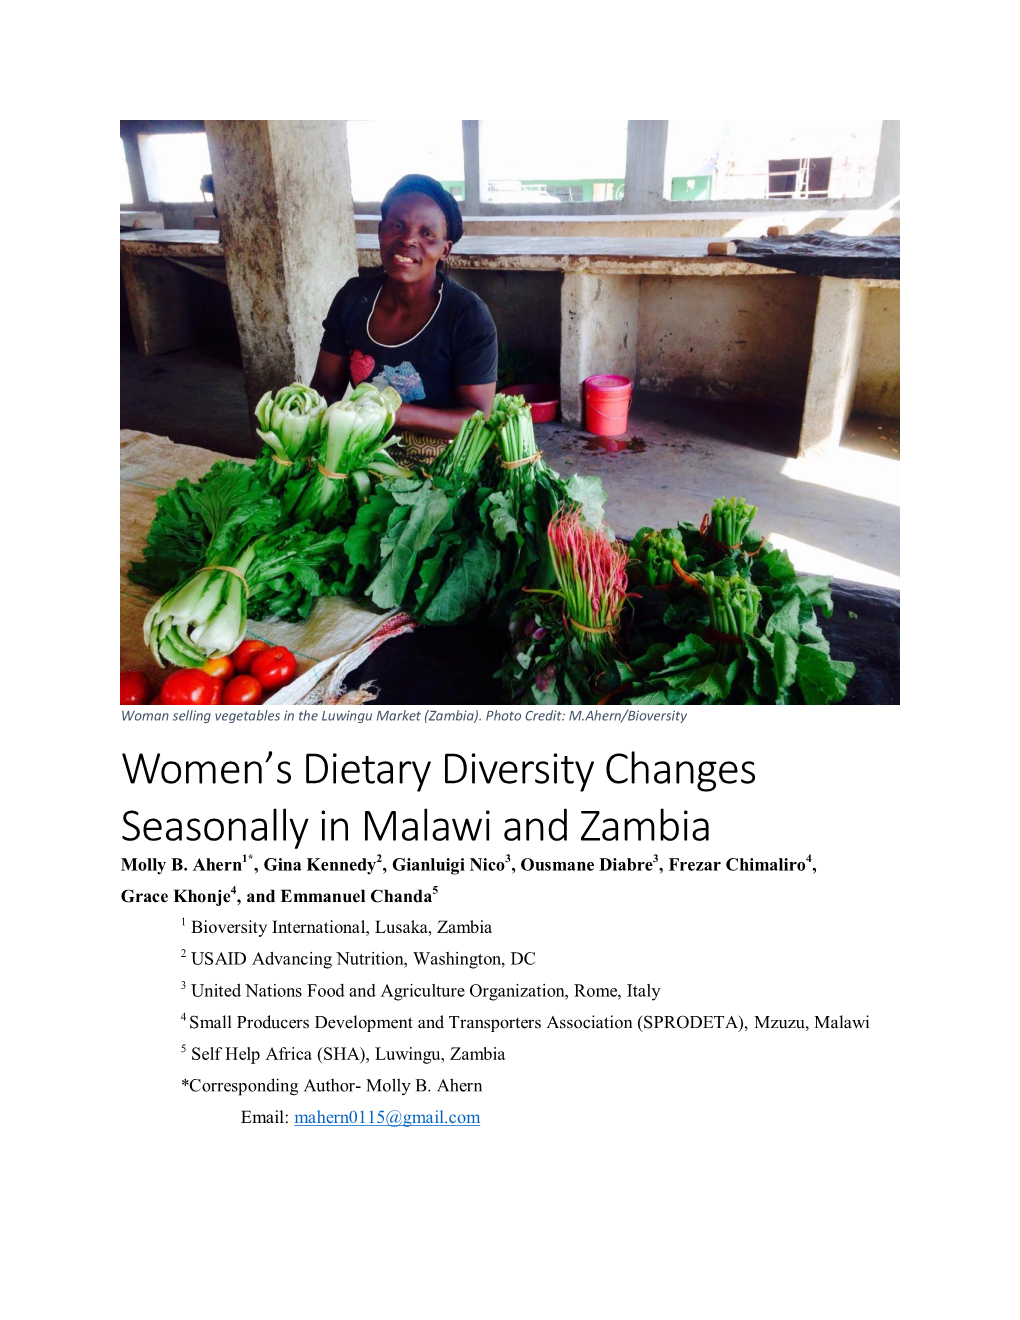 Women's Dietary Diversity Changes Seasonally in Malawi and Zambia